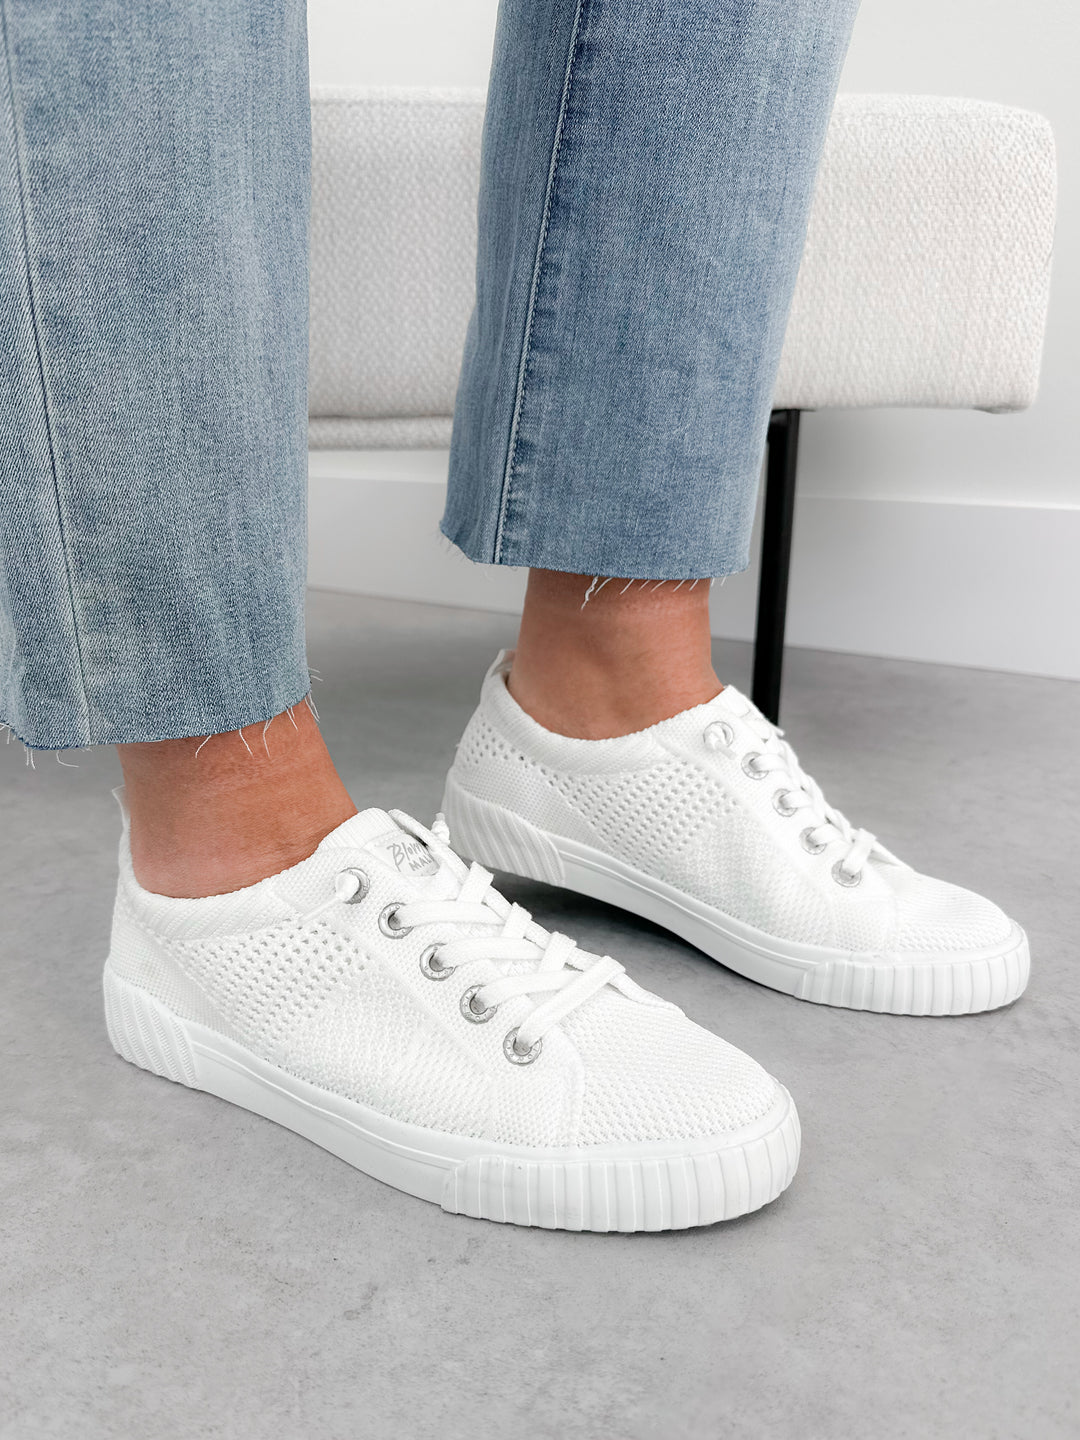 Wistful Sneakers in White by Blowfish